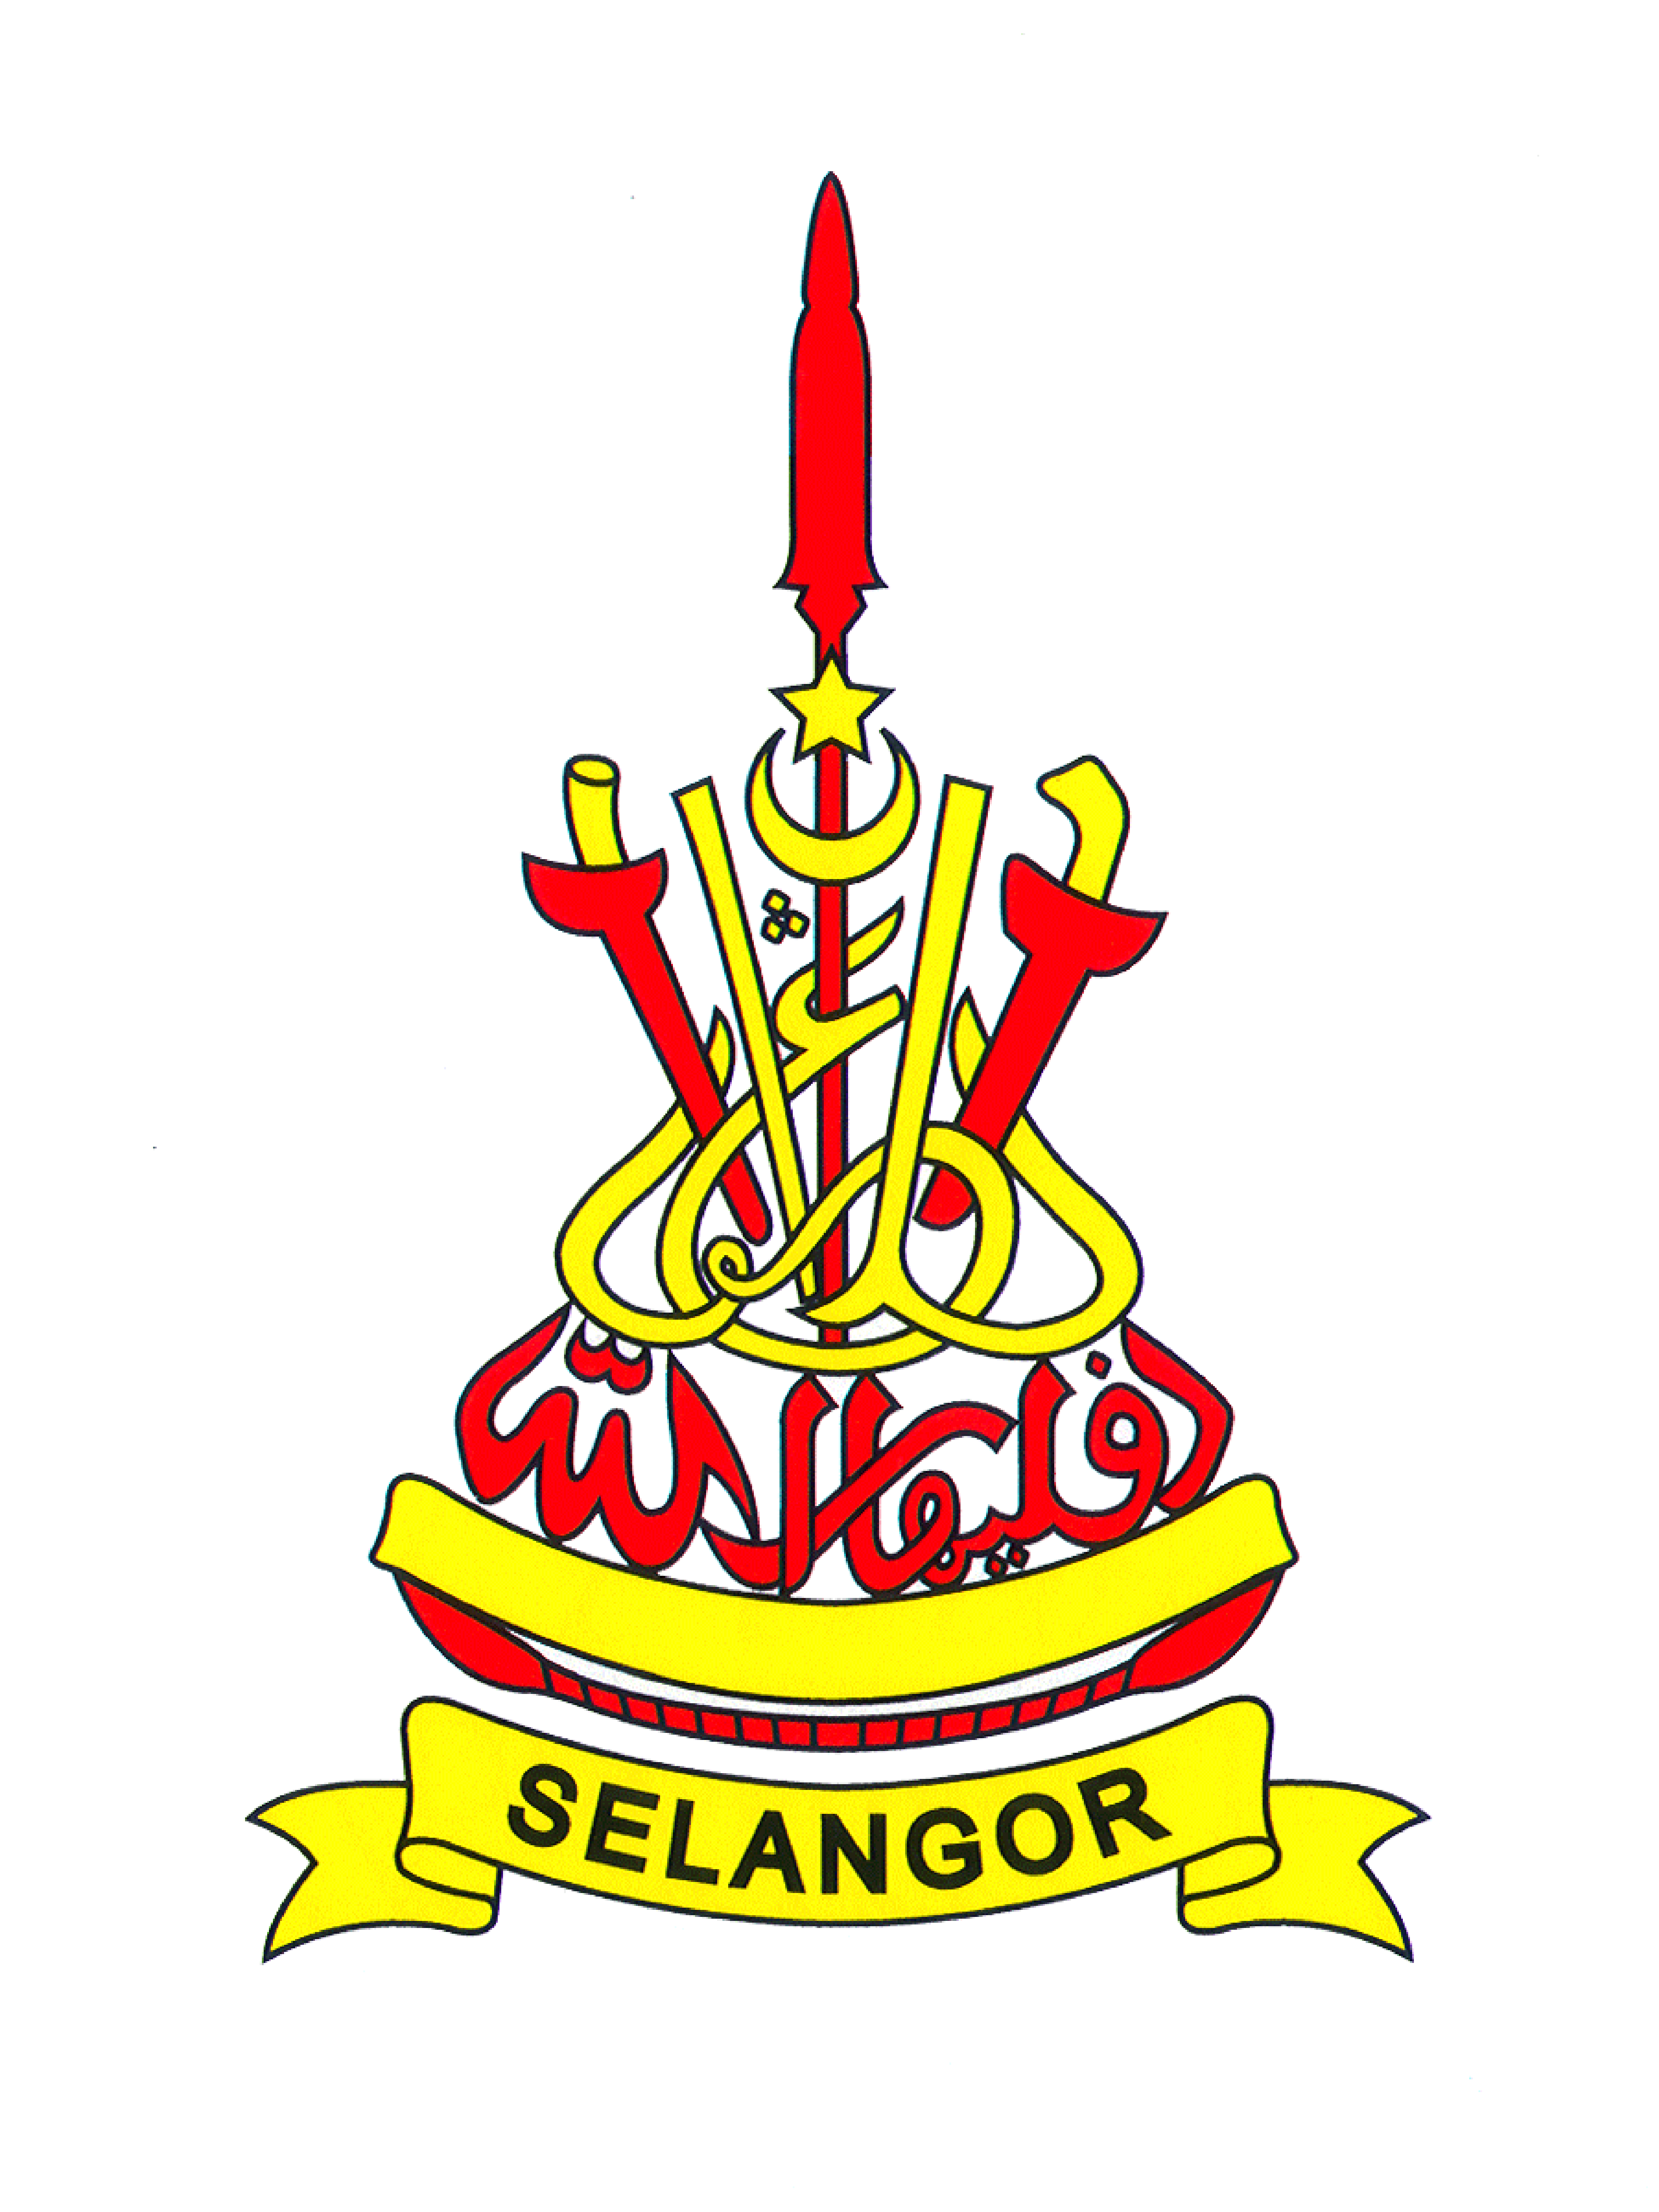 Jata Selangor